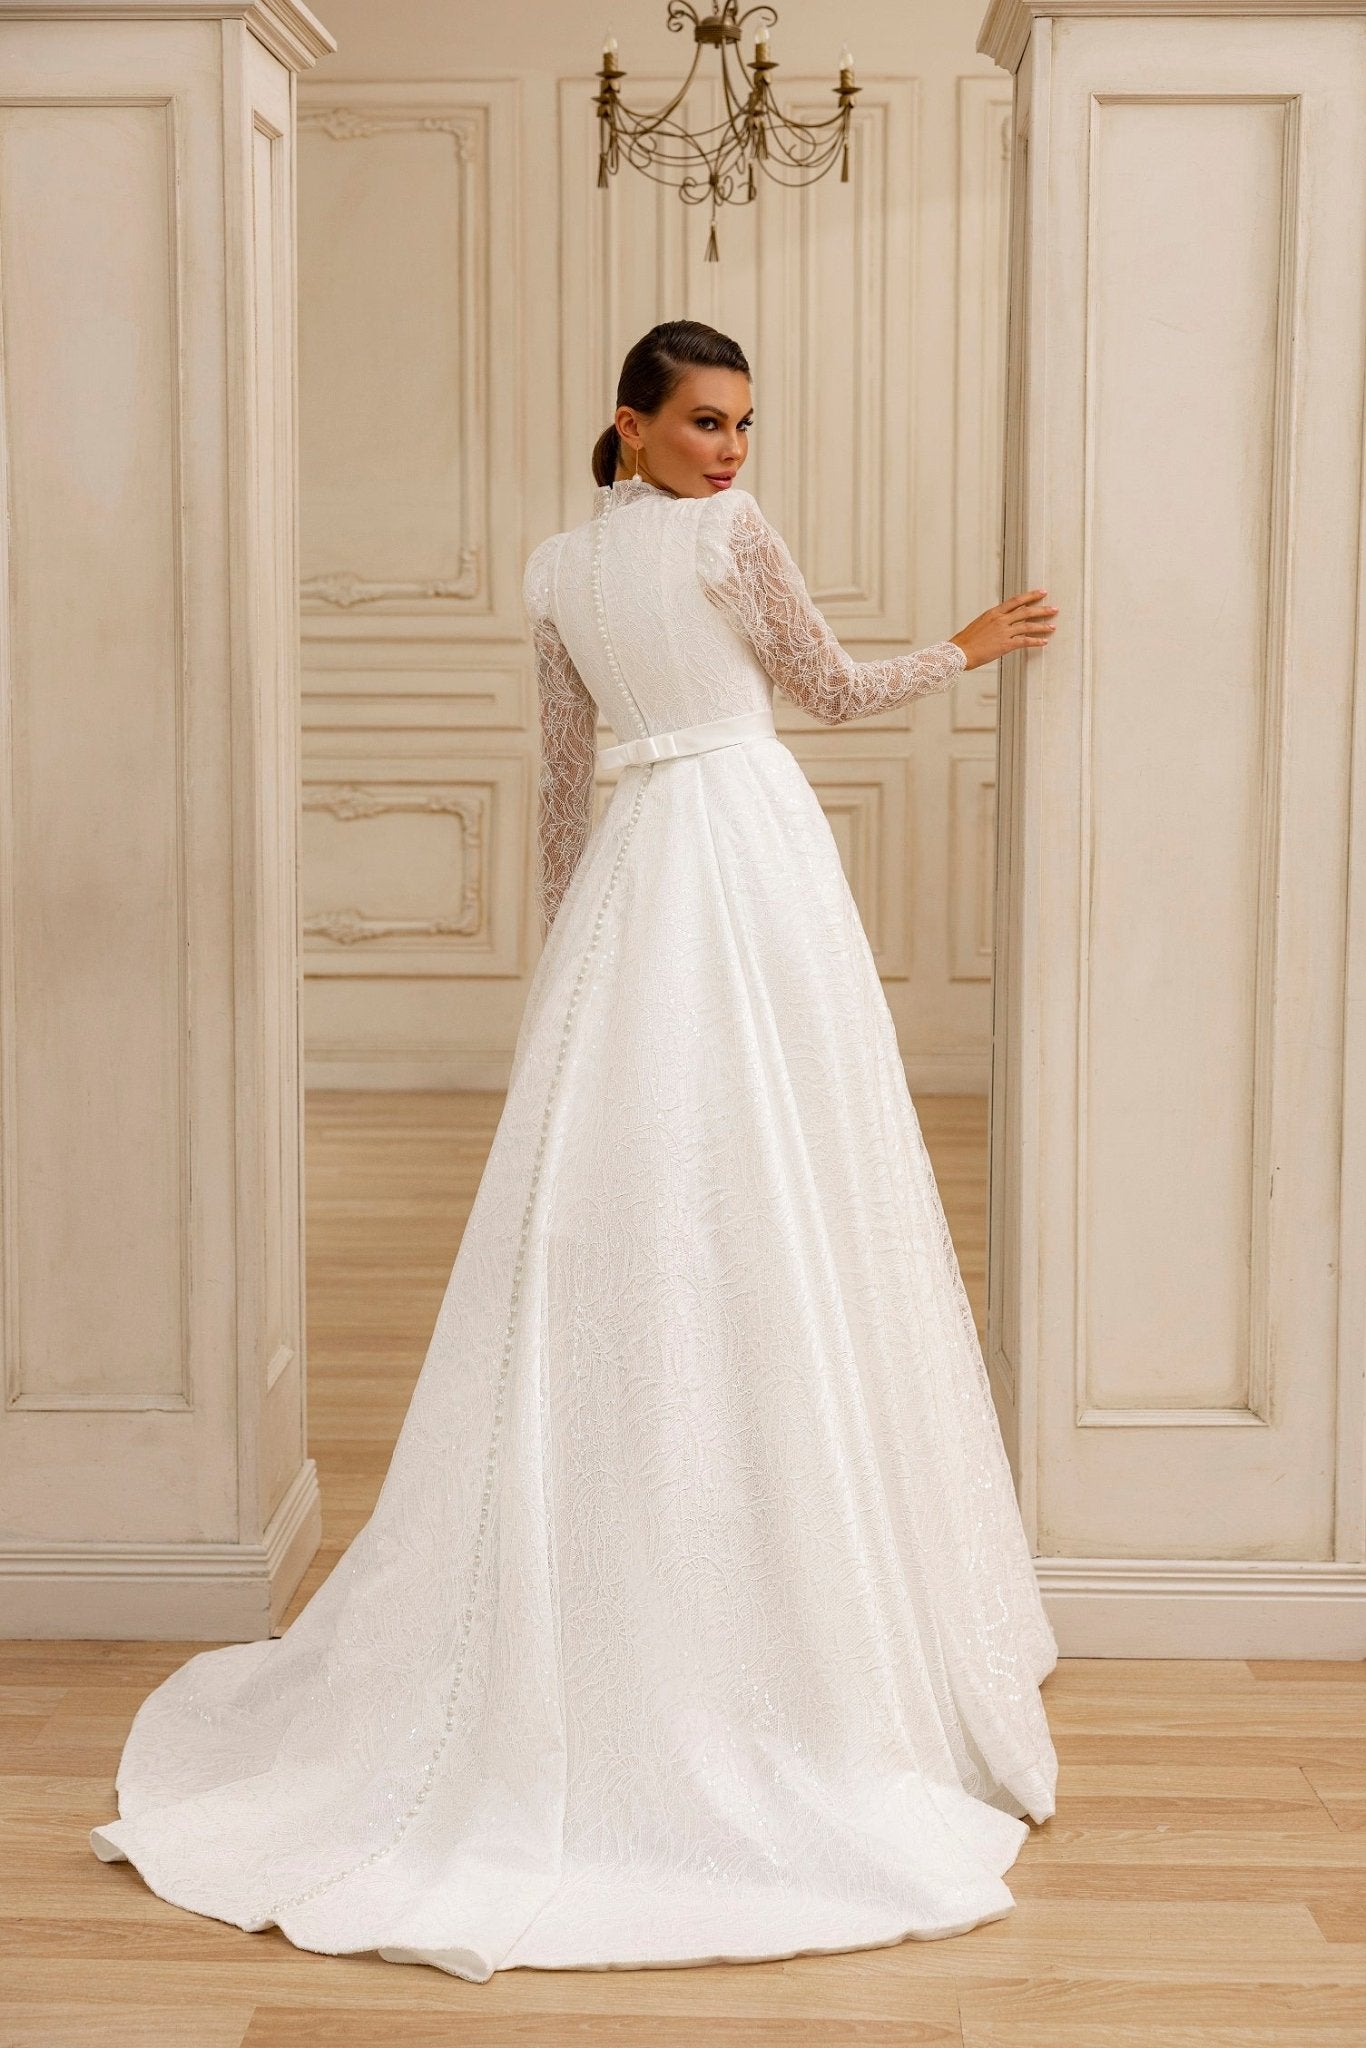 Elegant Modest High-Neck A-Line Wedding Dress with Lace Overlay and Subtle Train Plus Size - WonderlandByLilian